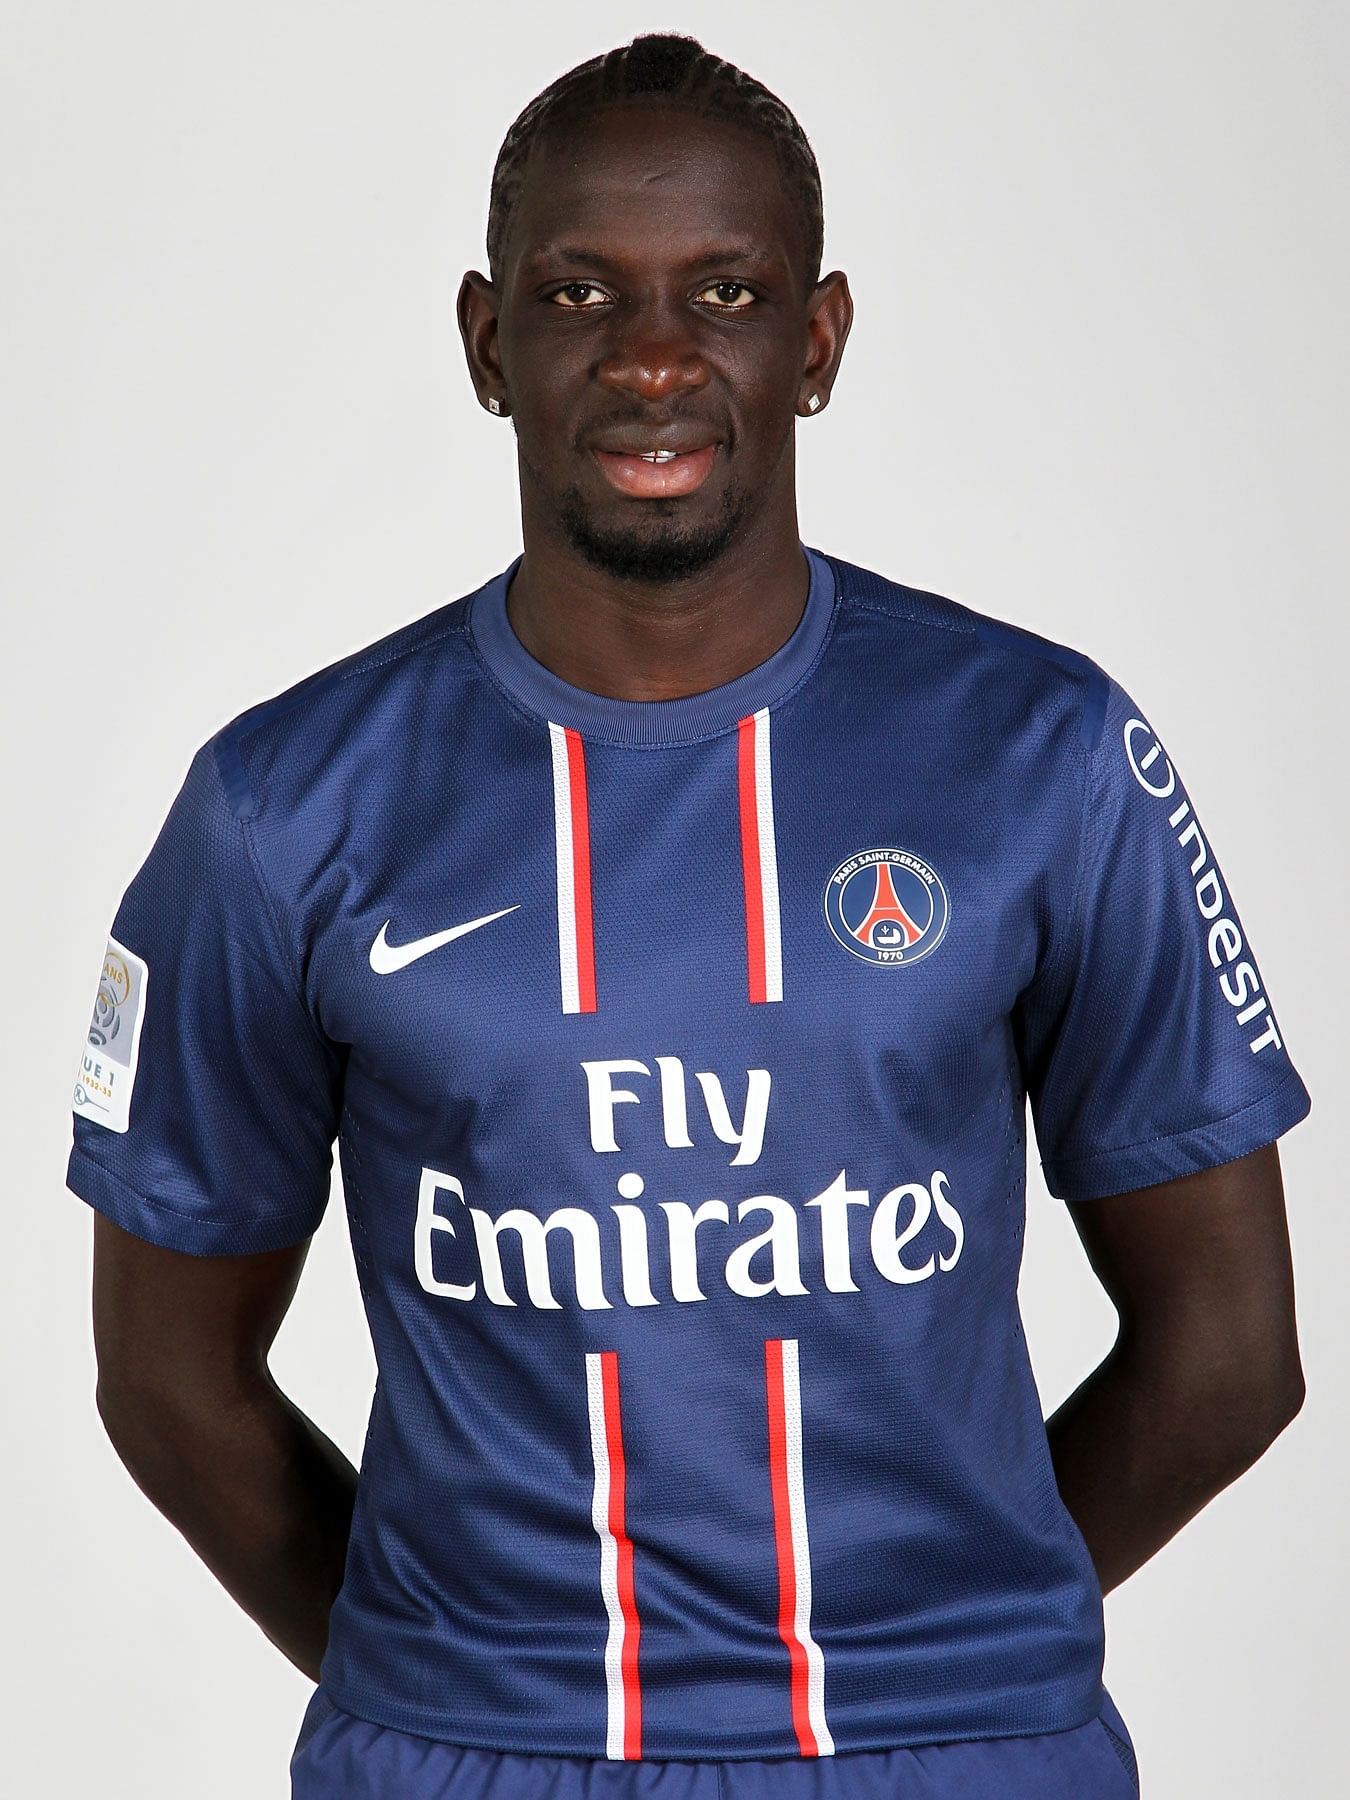 Mamadou Sakho Profile Picture